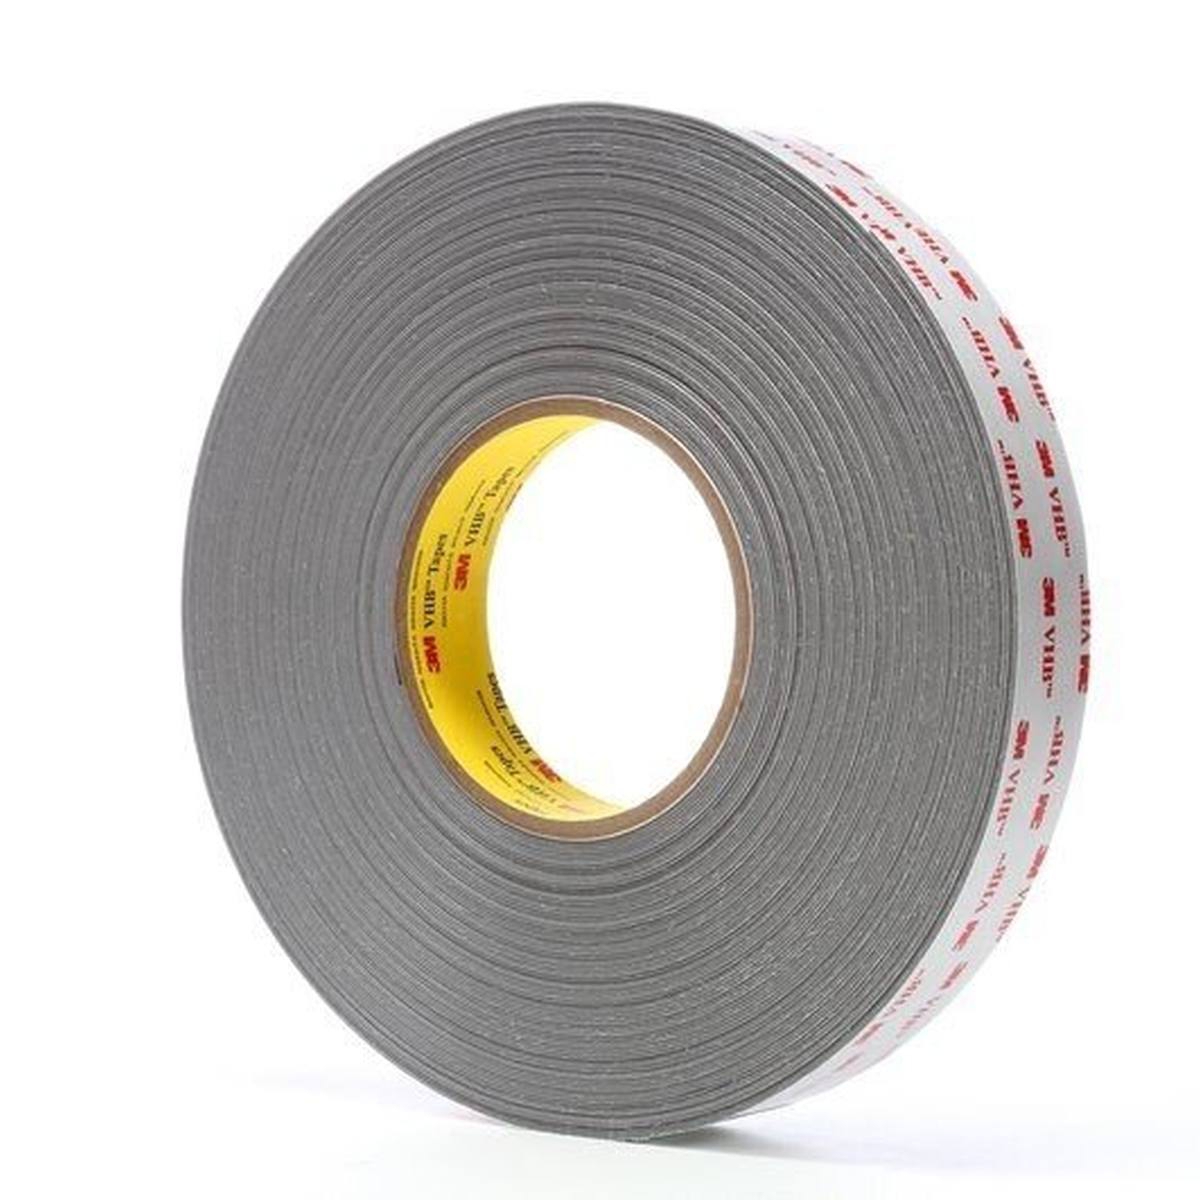 3M VHB adhesive tape RP 080GP, paper liner, gray, 1120 mm x 66 m, 0.8 mm